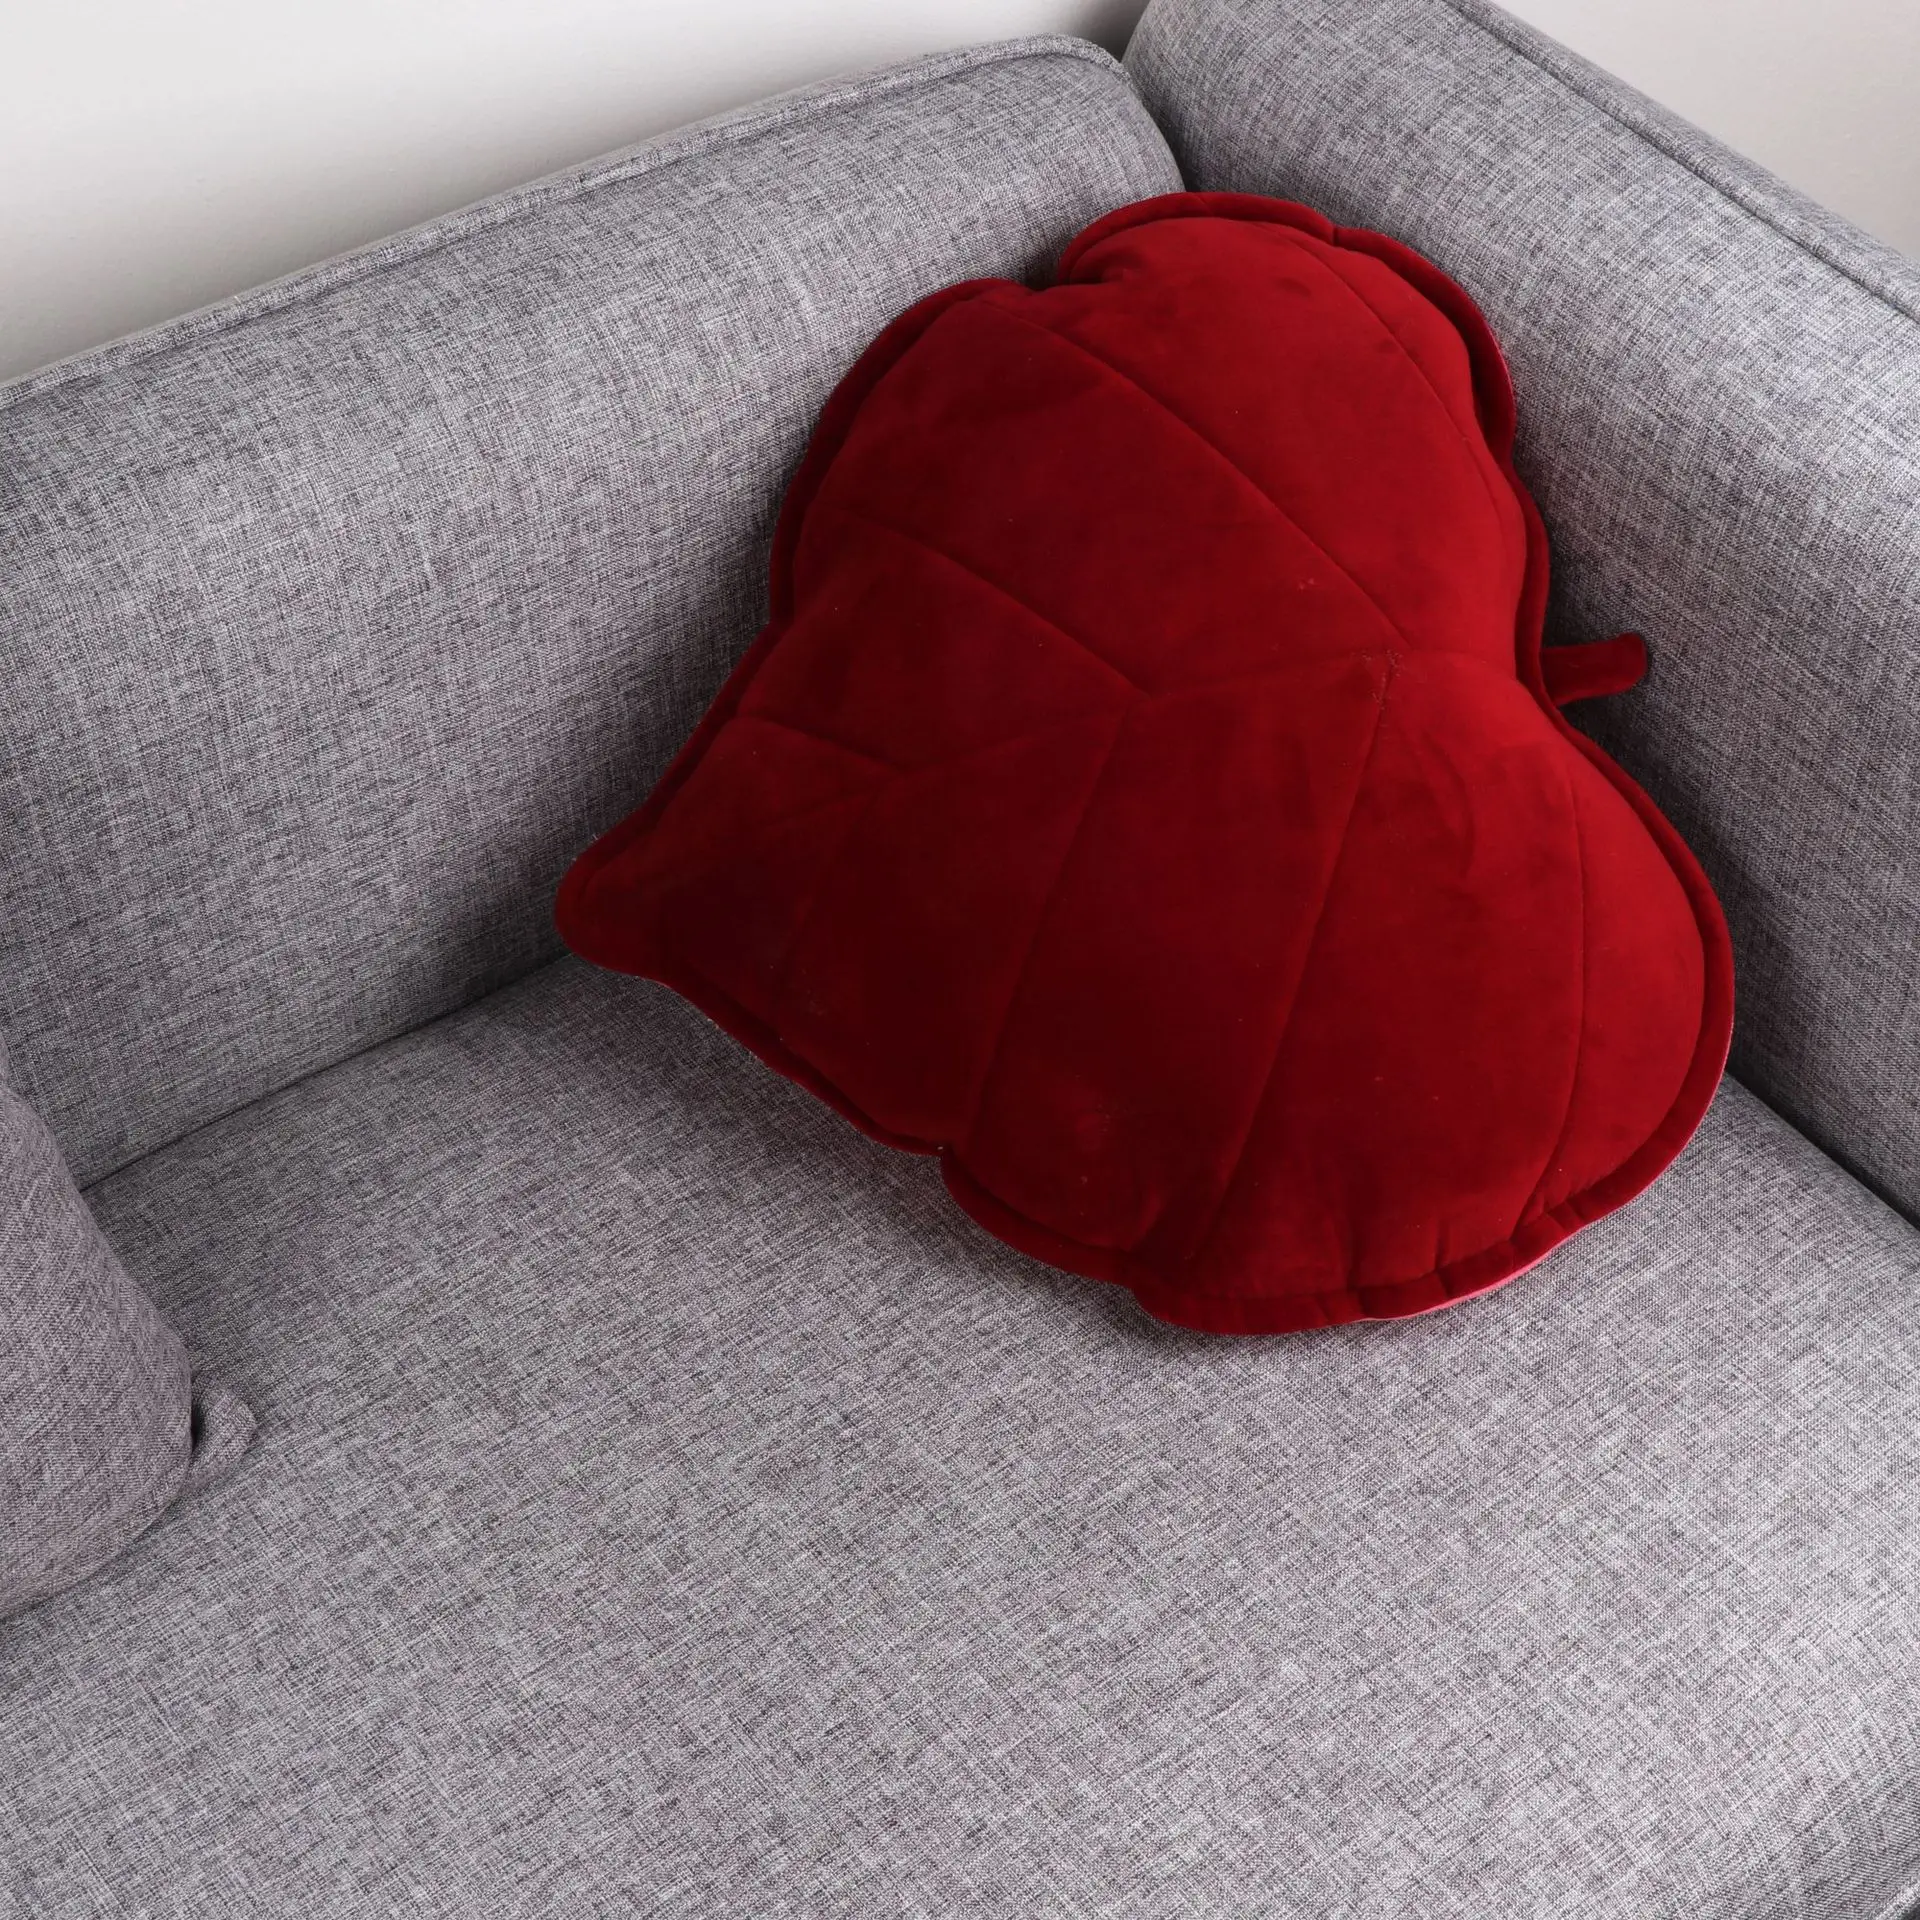 Creative Heart Shape Leaves Kids Pillow 3D Simulation Stuffed Plush Throw Pillow Home Decor Bedroom Sofa Pillow Car Cushion Gift